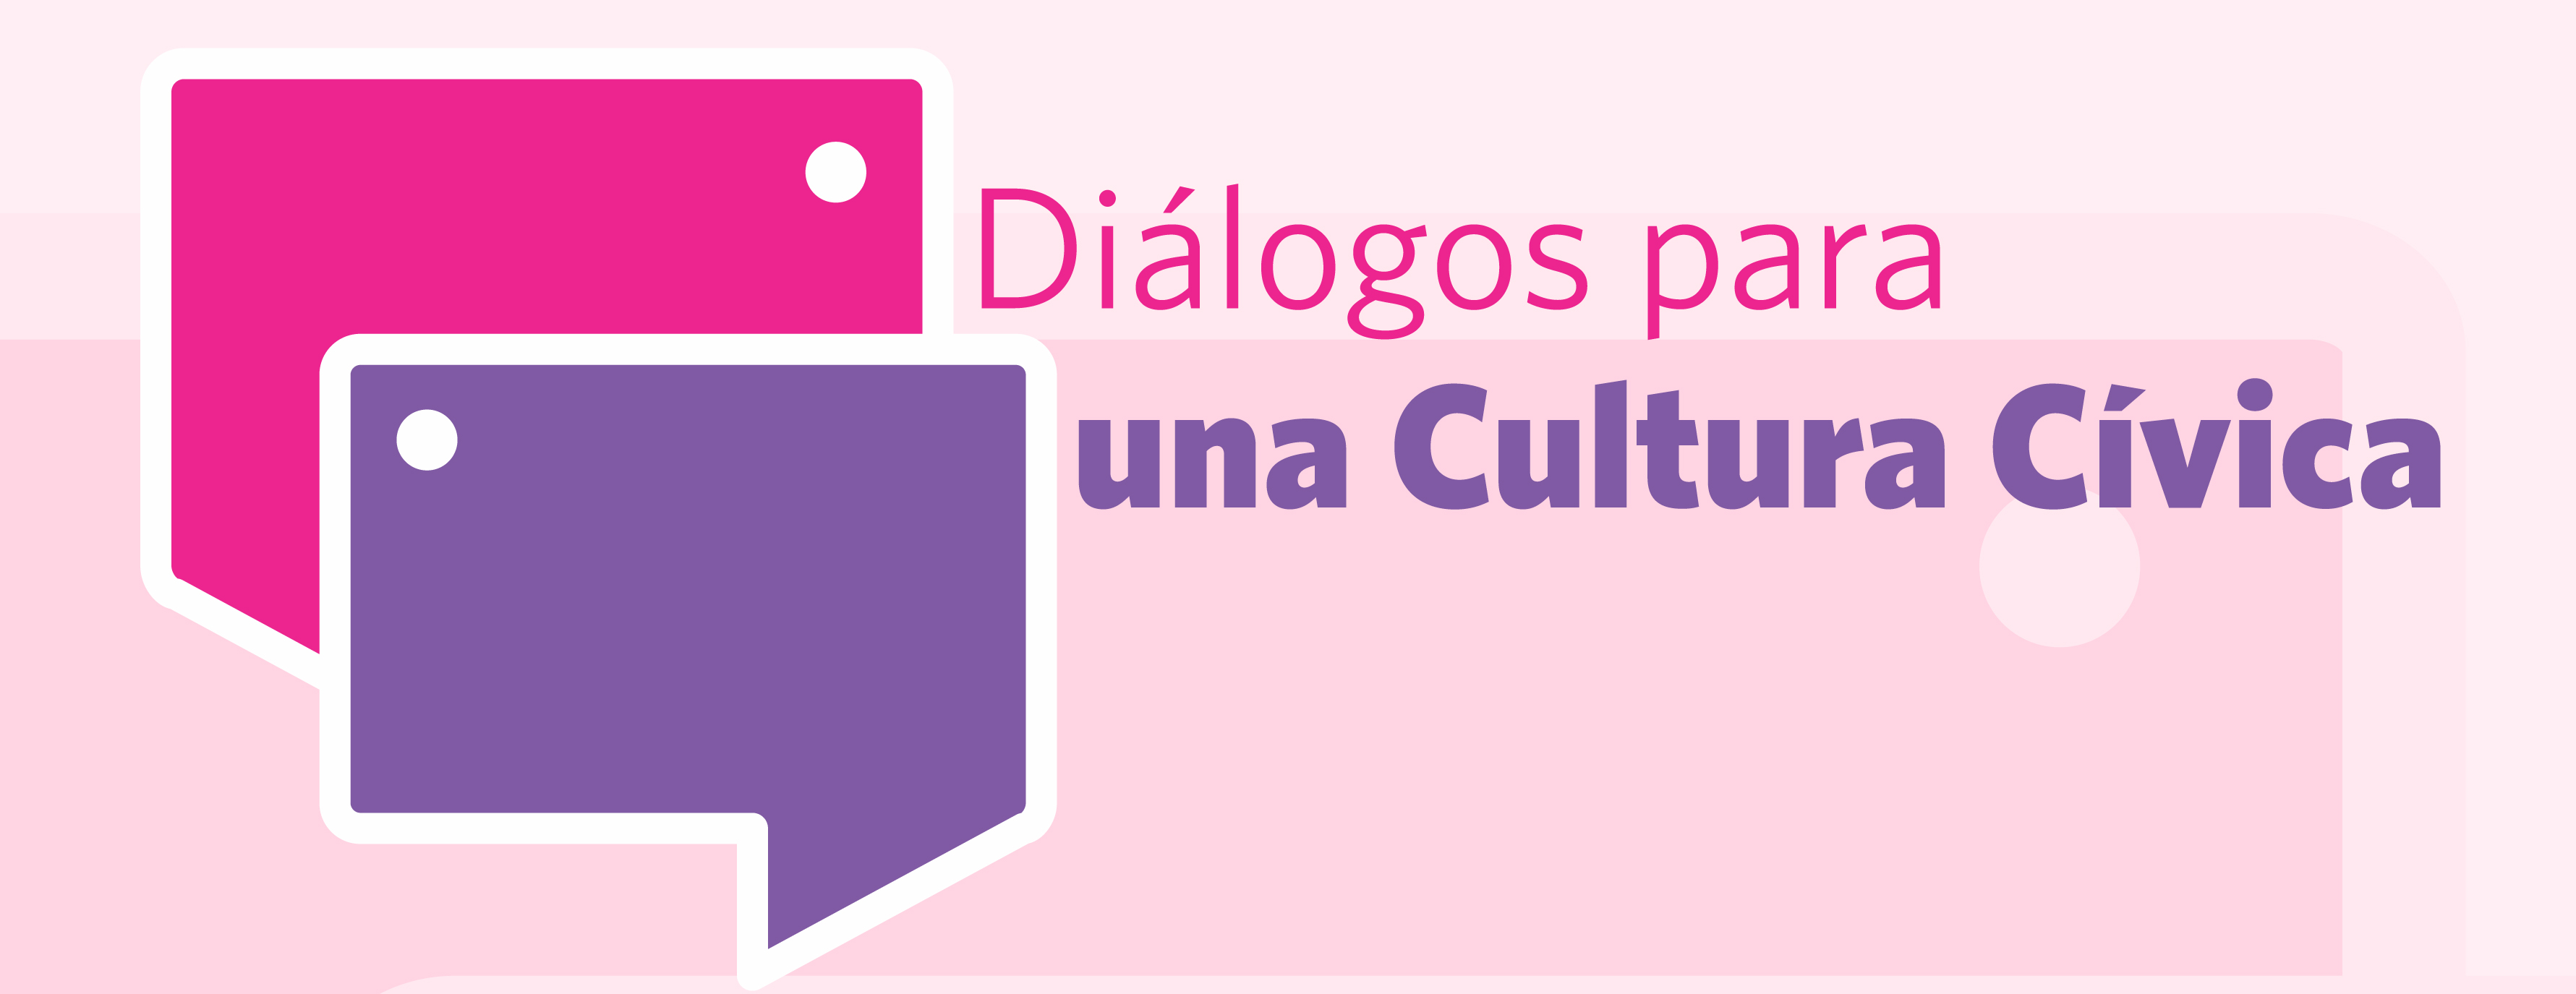 Diálogos para una Cultura Cívica